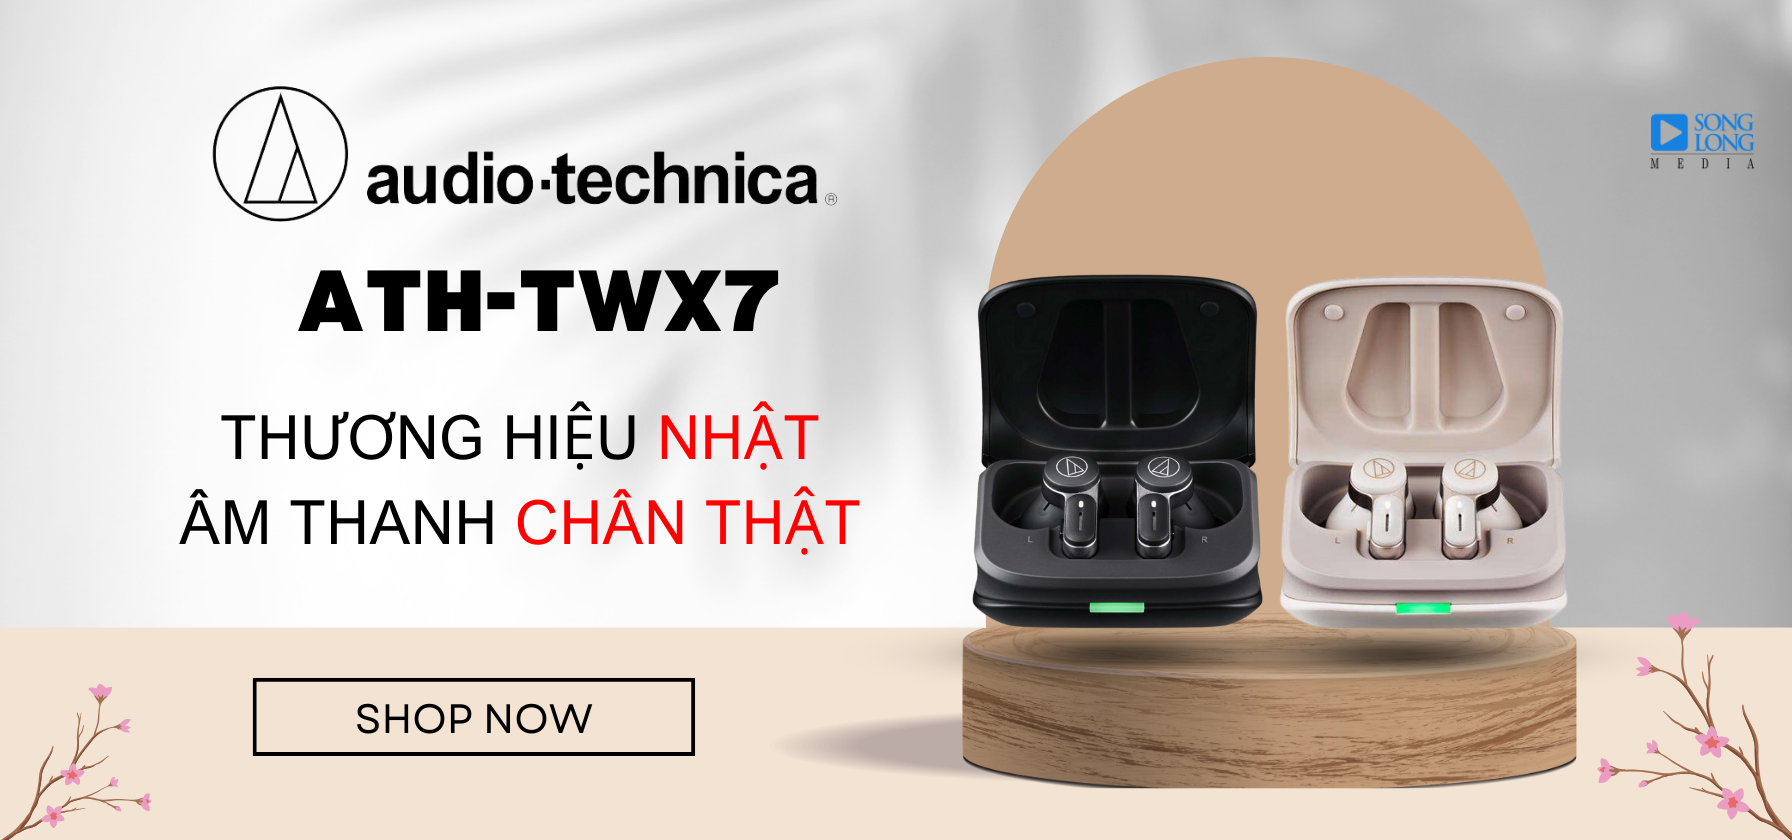 Banner audio technica ATH-TWX7 